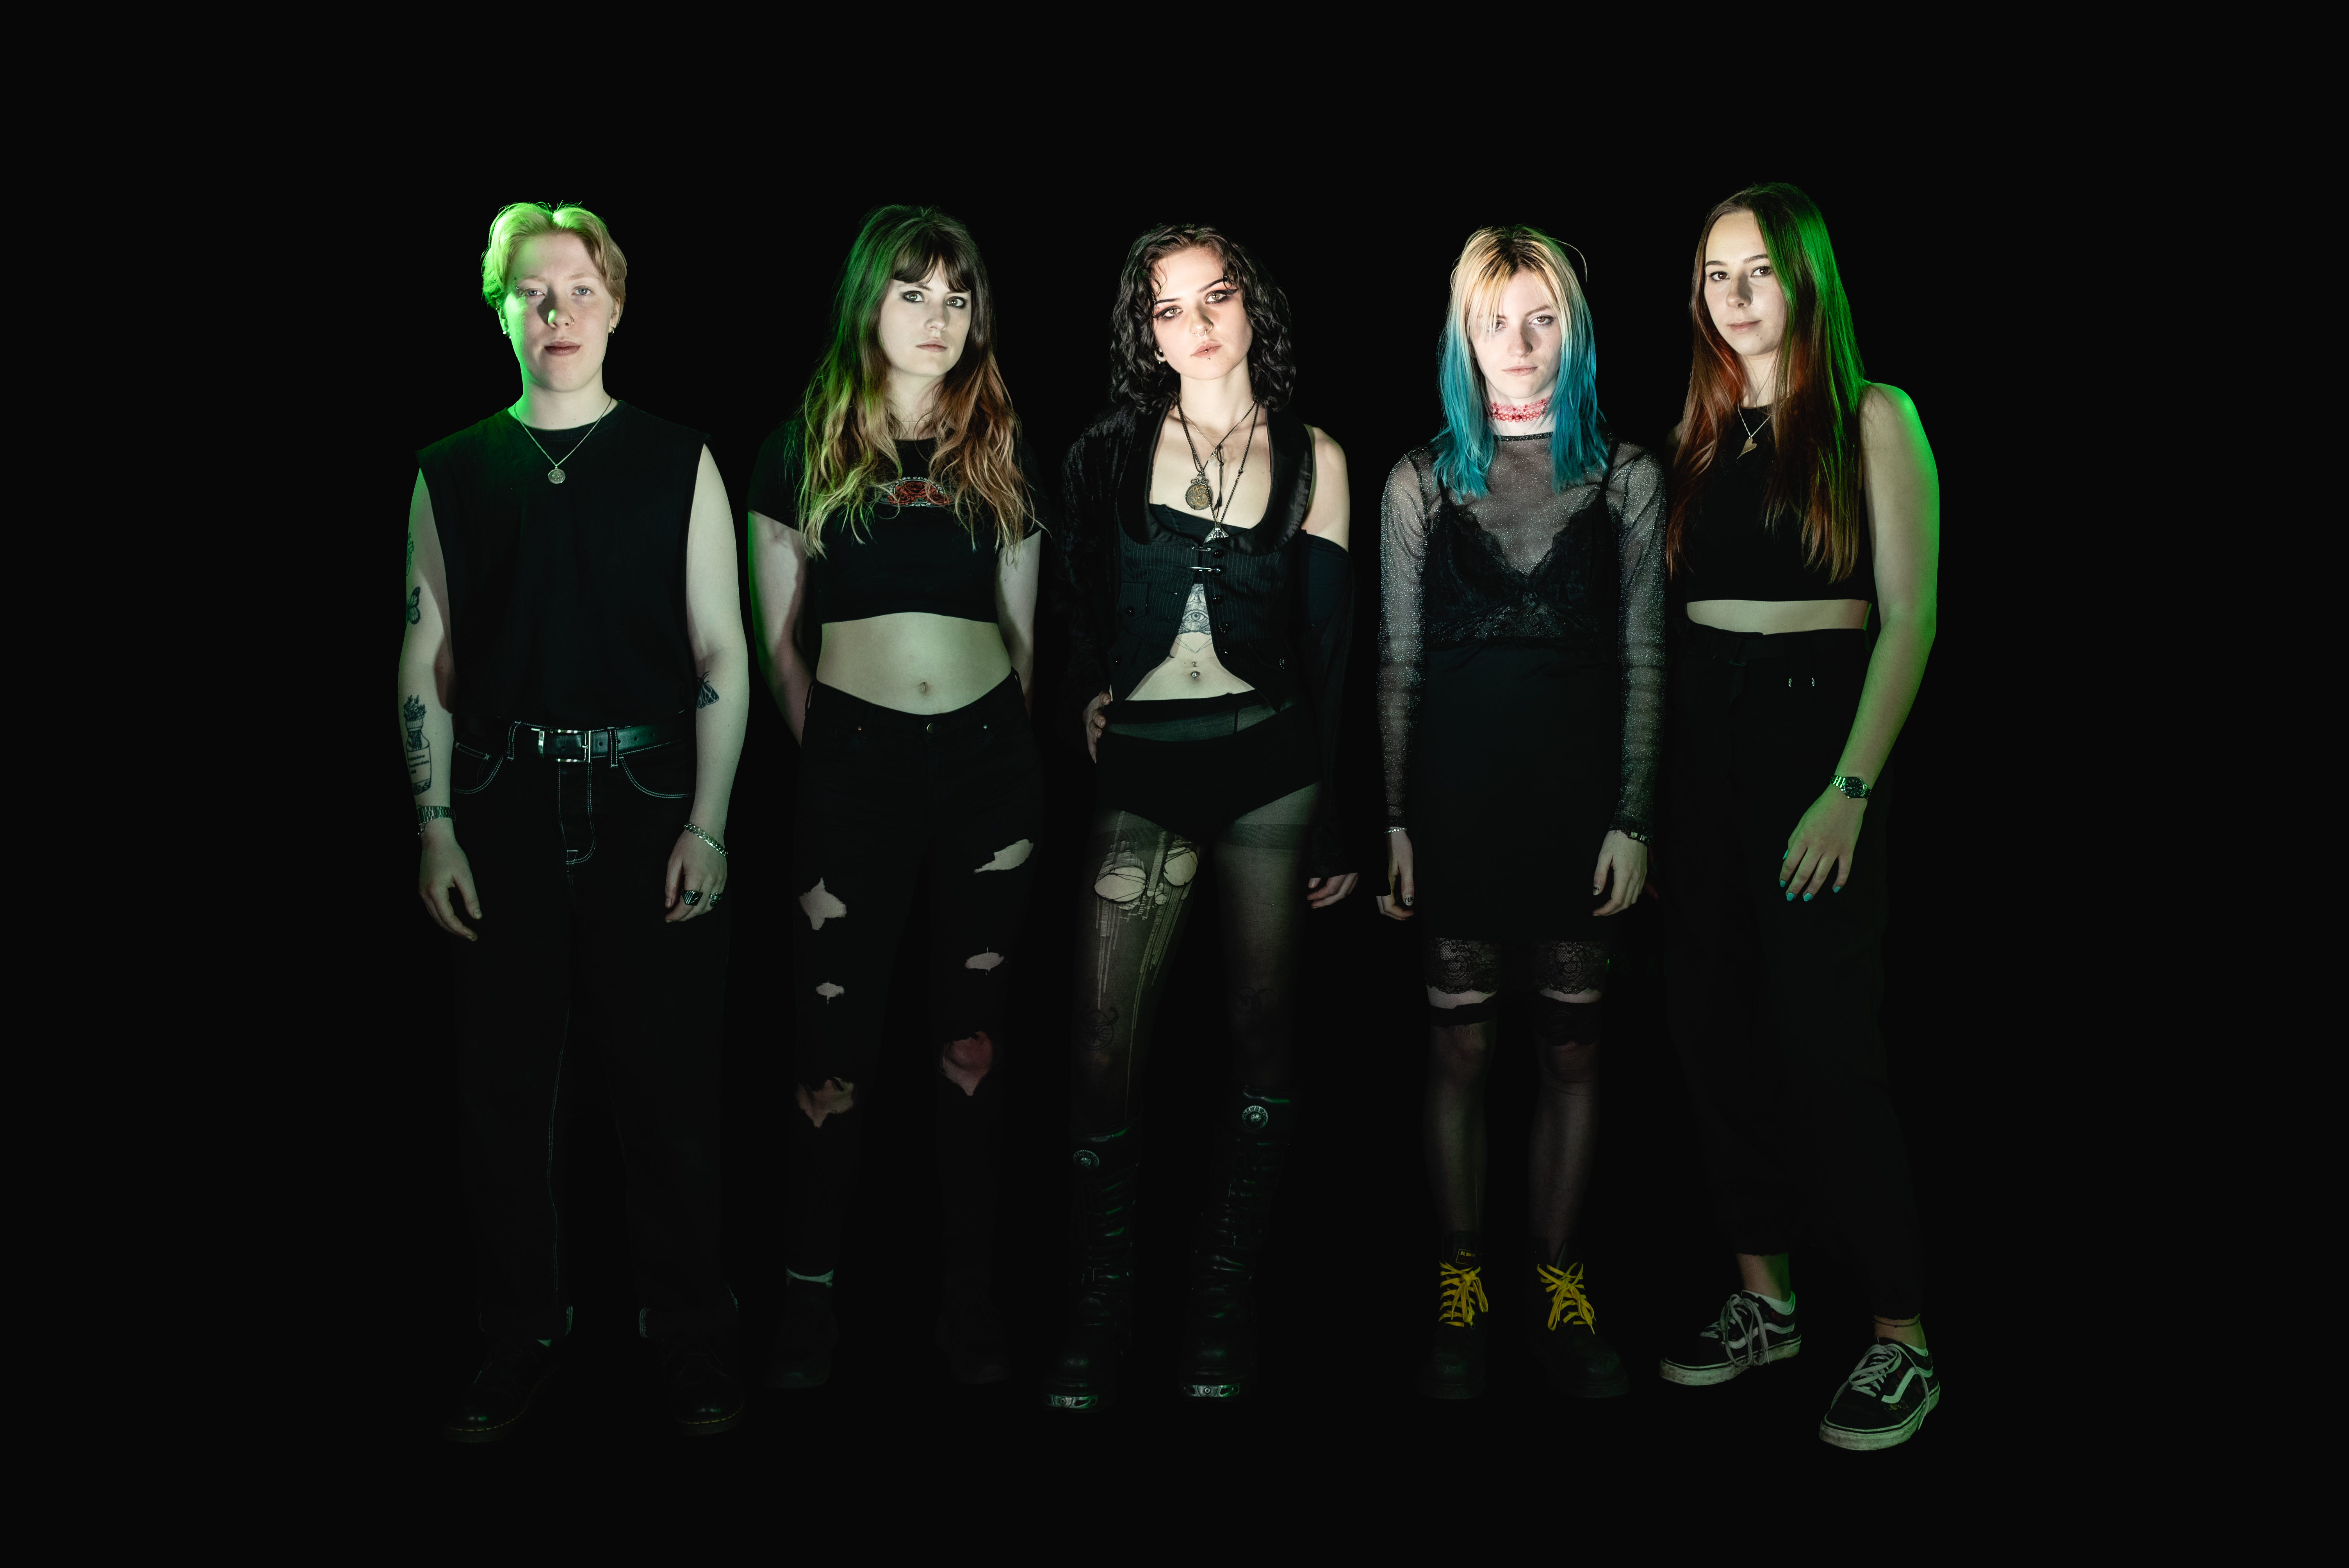 Bath/Bristol Punk-with-a-Twist Five-Piece Battery Acid Discuss Their Latest Single “Disposable”